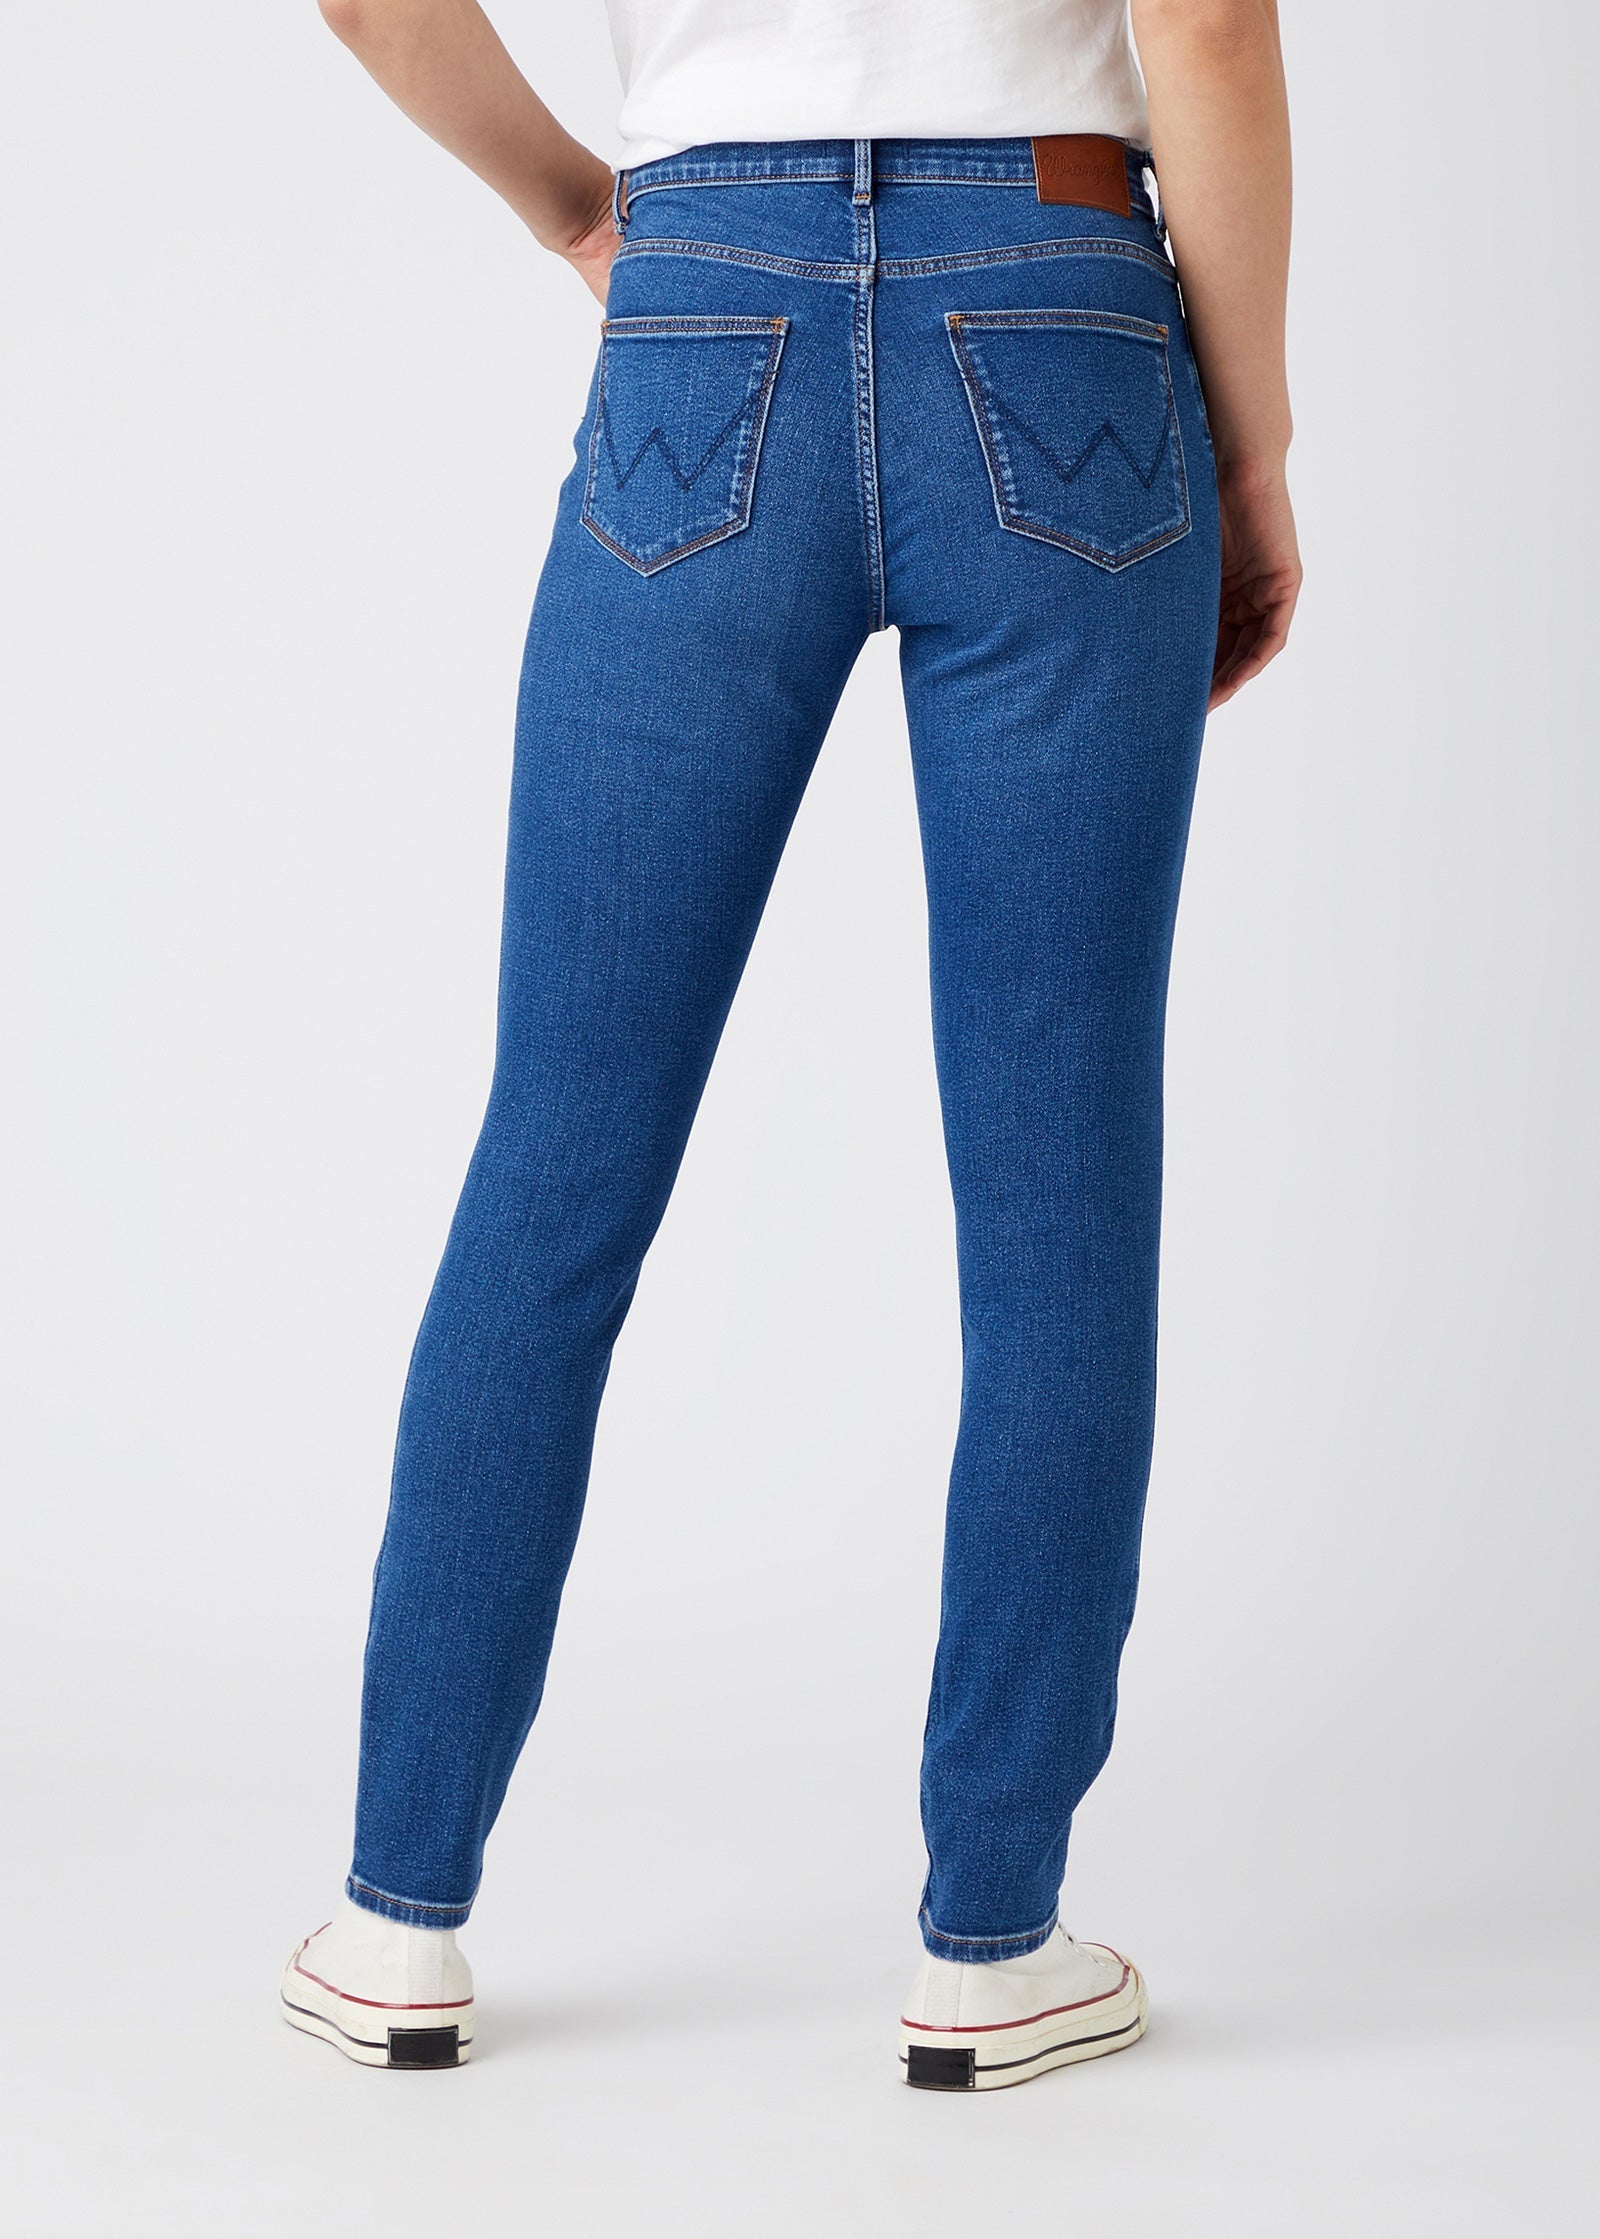 High Rise Skinny Jeans in Camellia Jeans Wrangler   